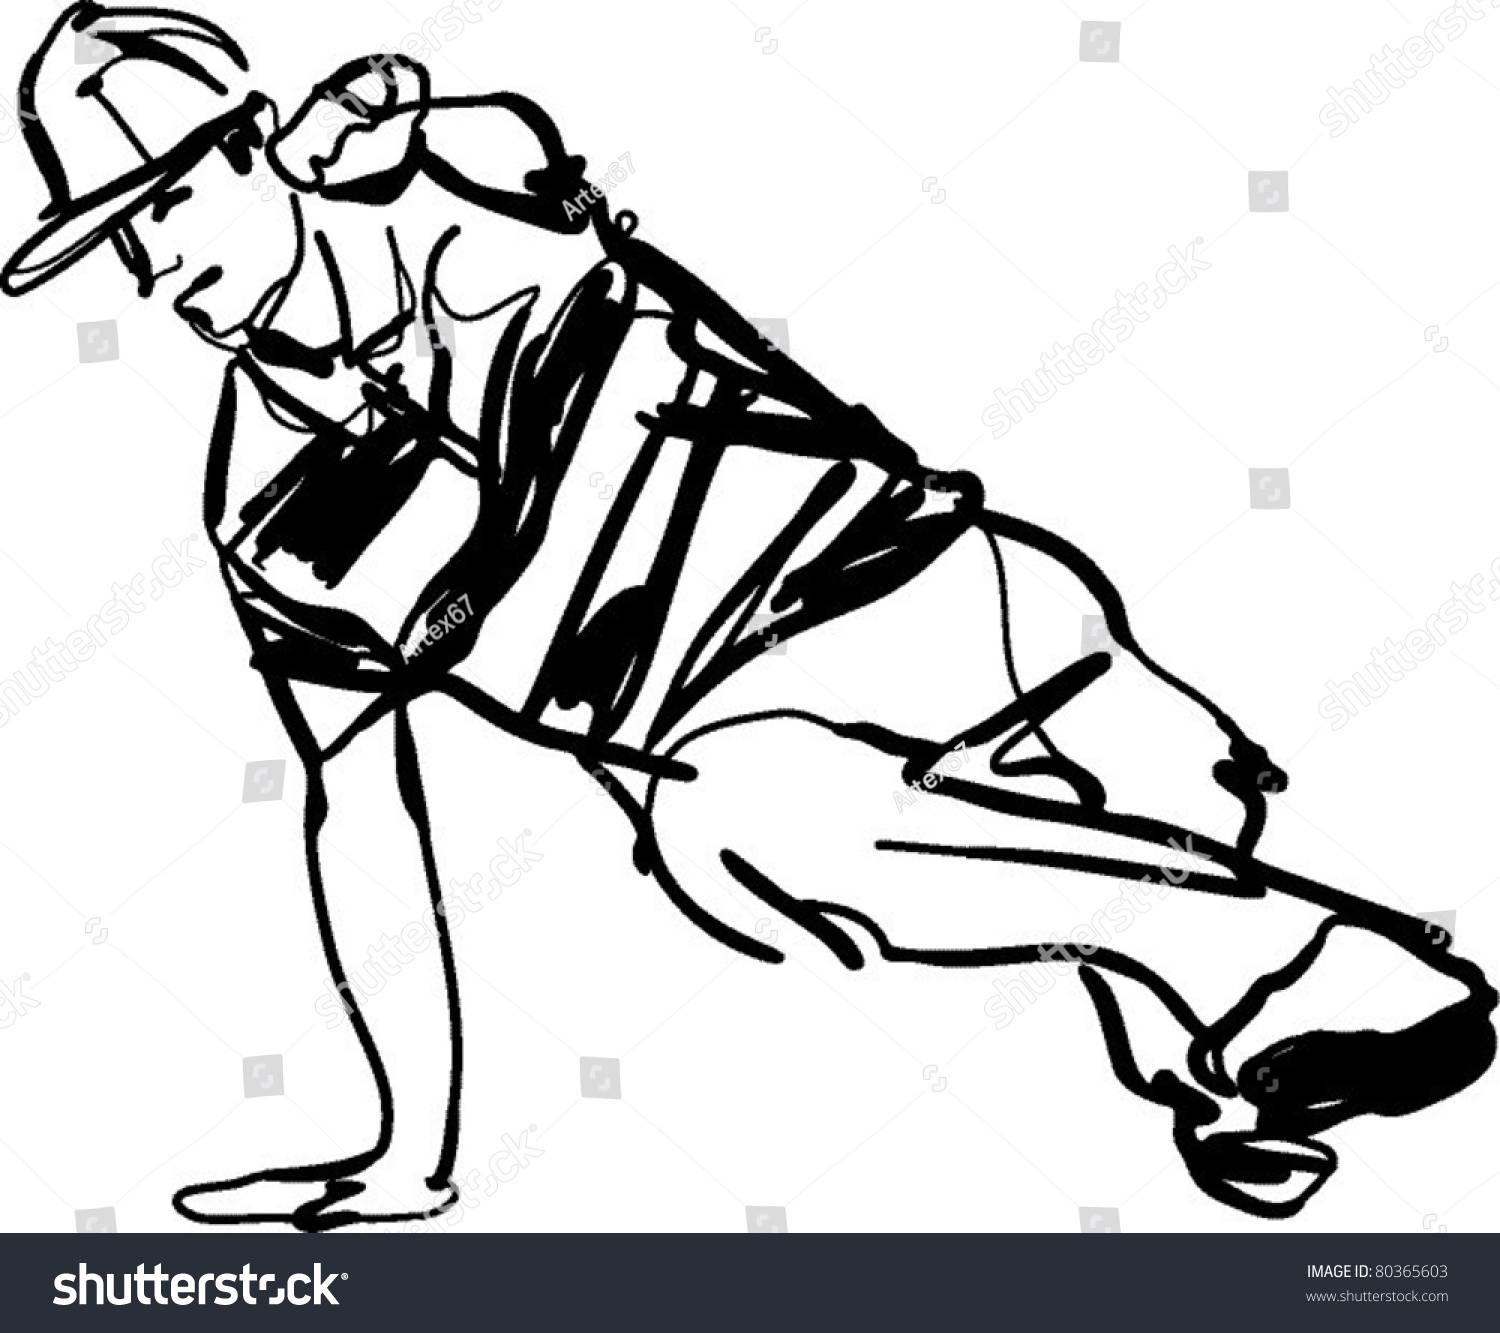 SVG of Bboy guy dancing breakdance svg